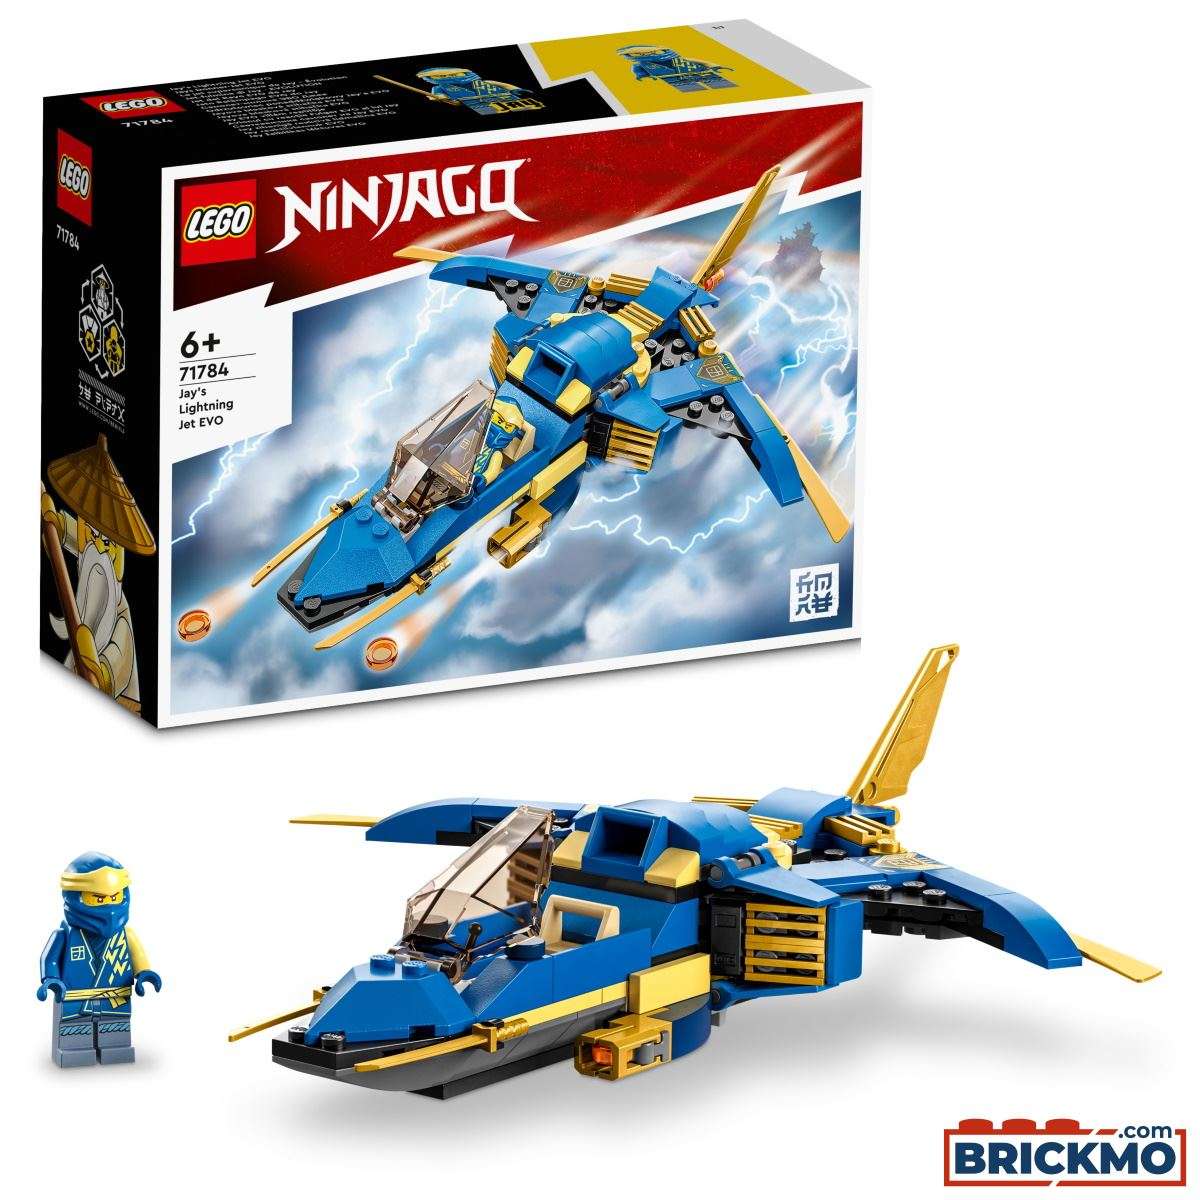 LEGO Ninjago 71784 Jays Donner-Jet EVO 71784